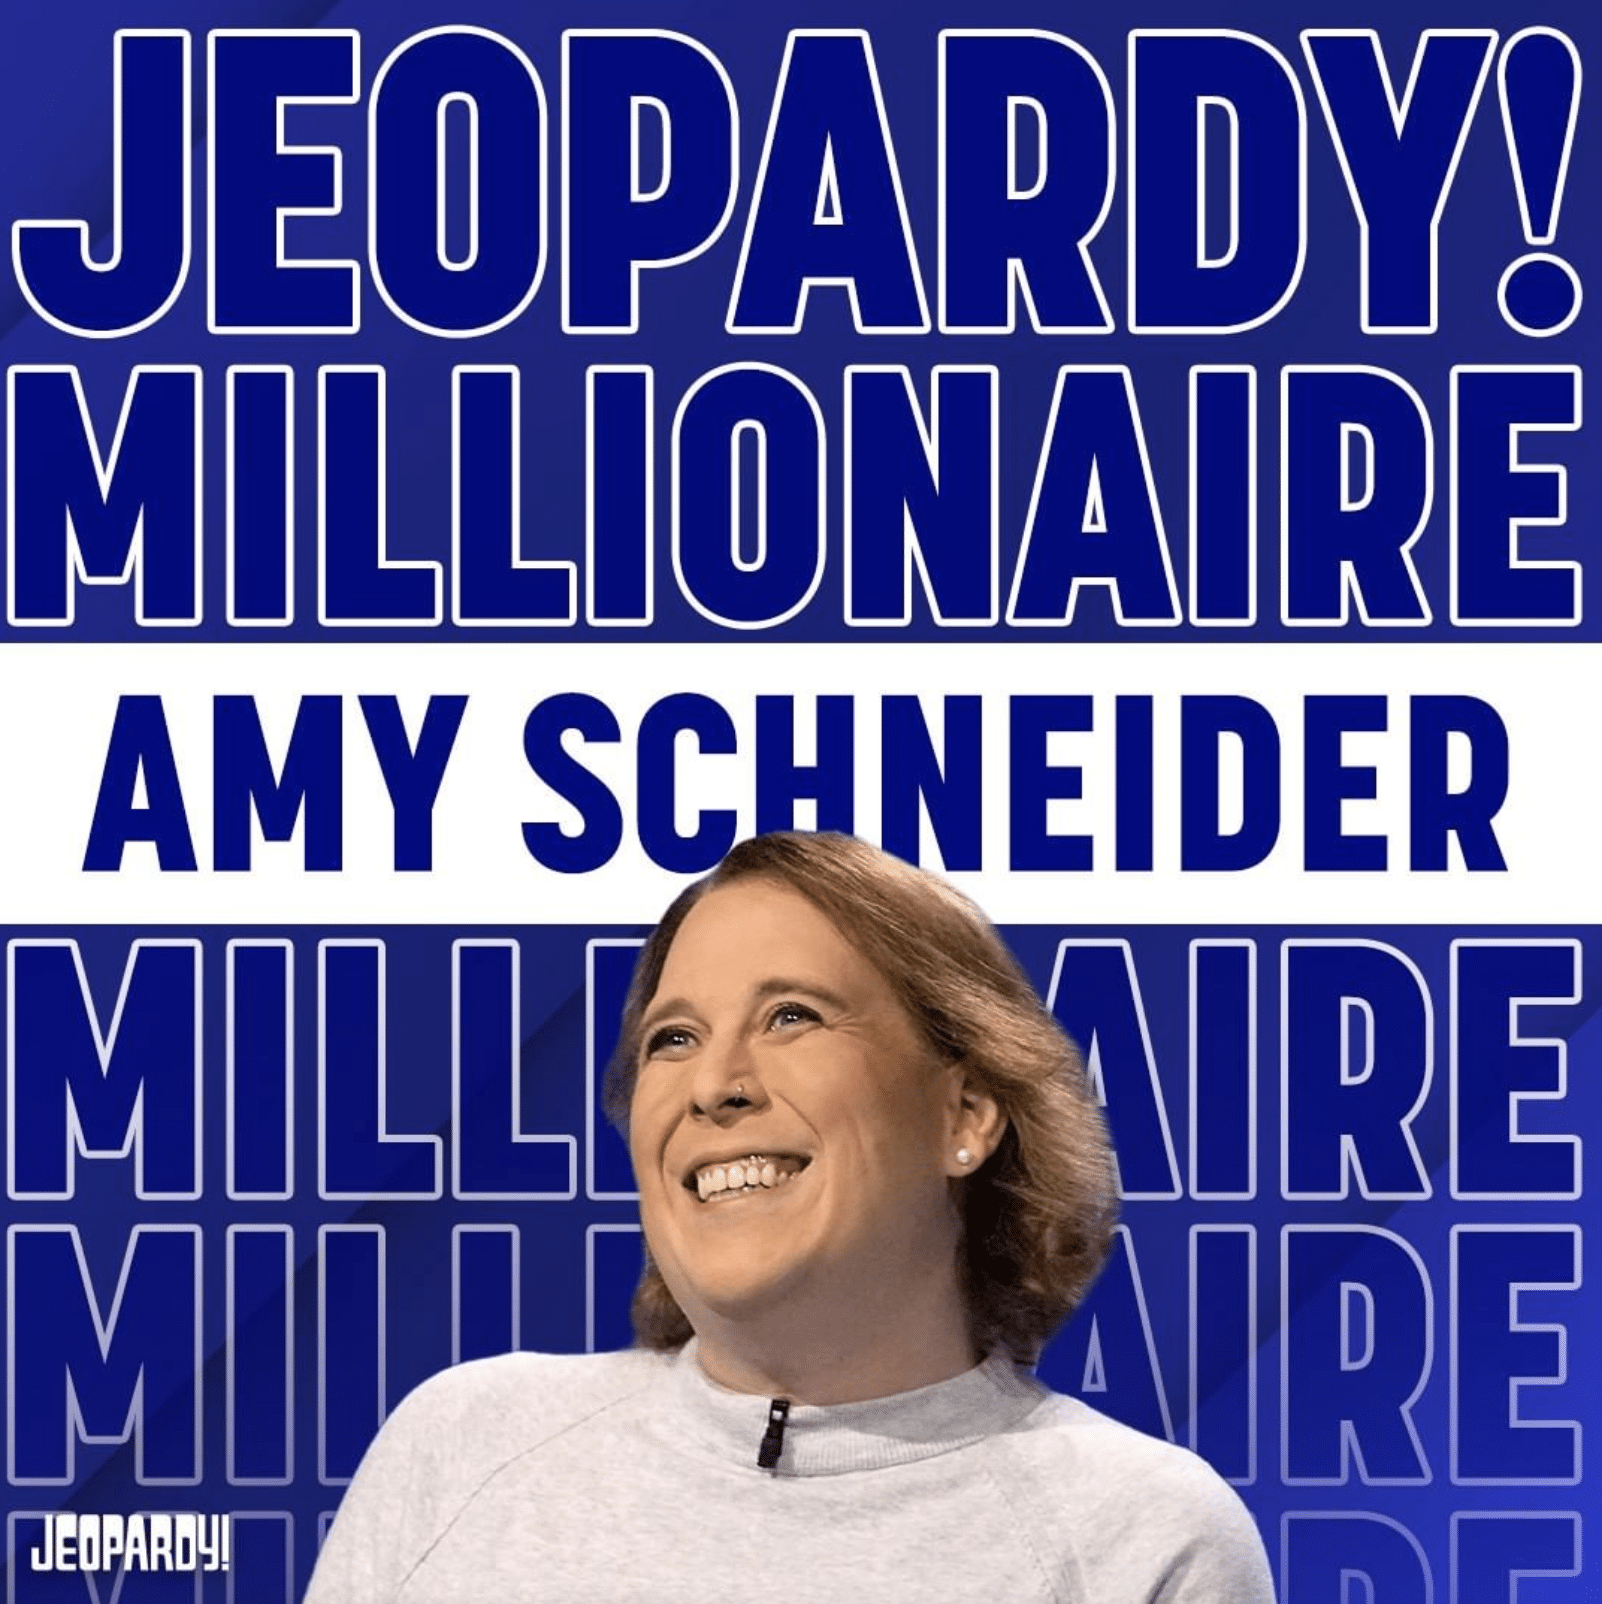 Amy Schneider is a 'Jeopardy!' millionaire